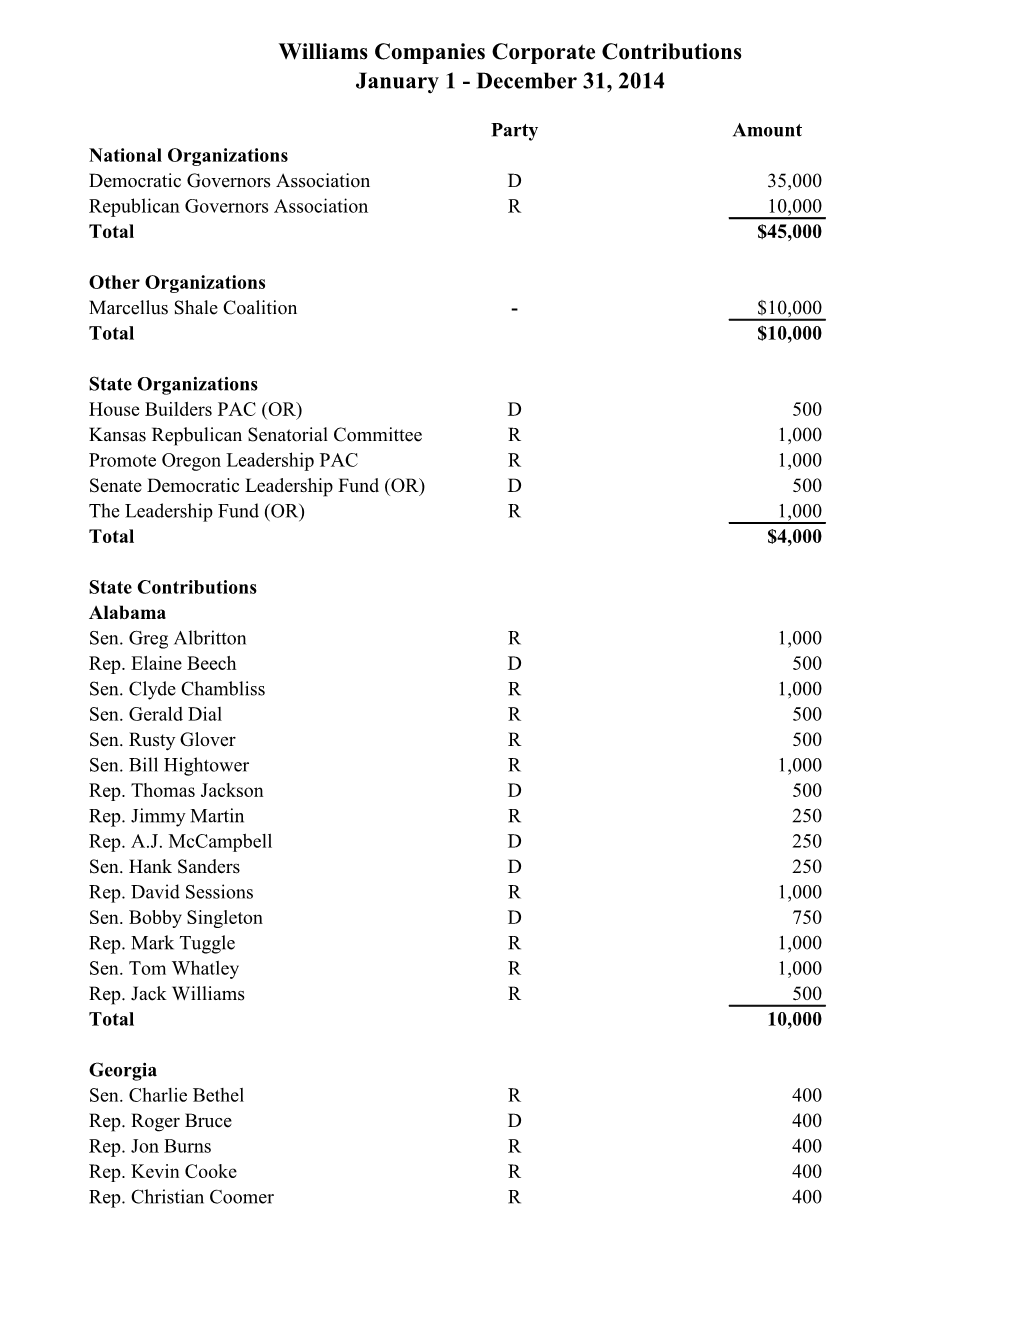 Williams Companies Corporate Contributions January 1 - December 31, 2014